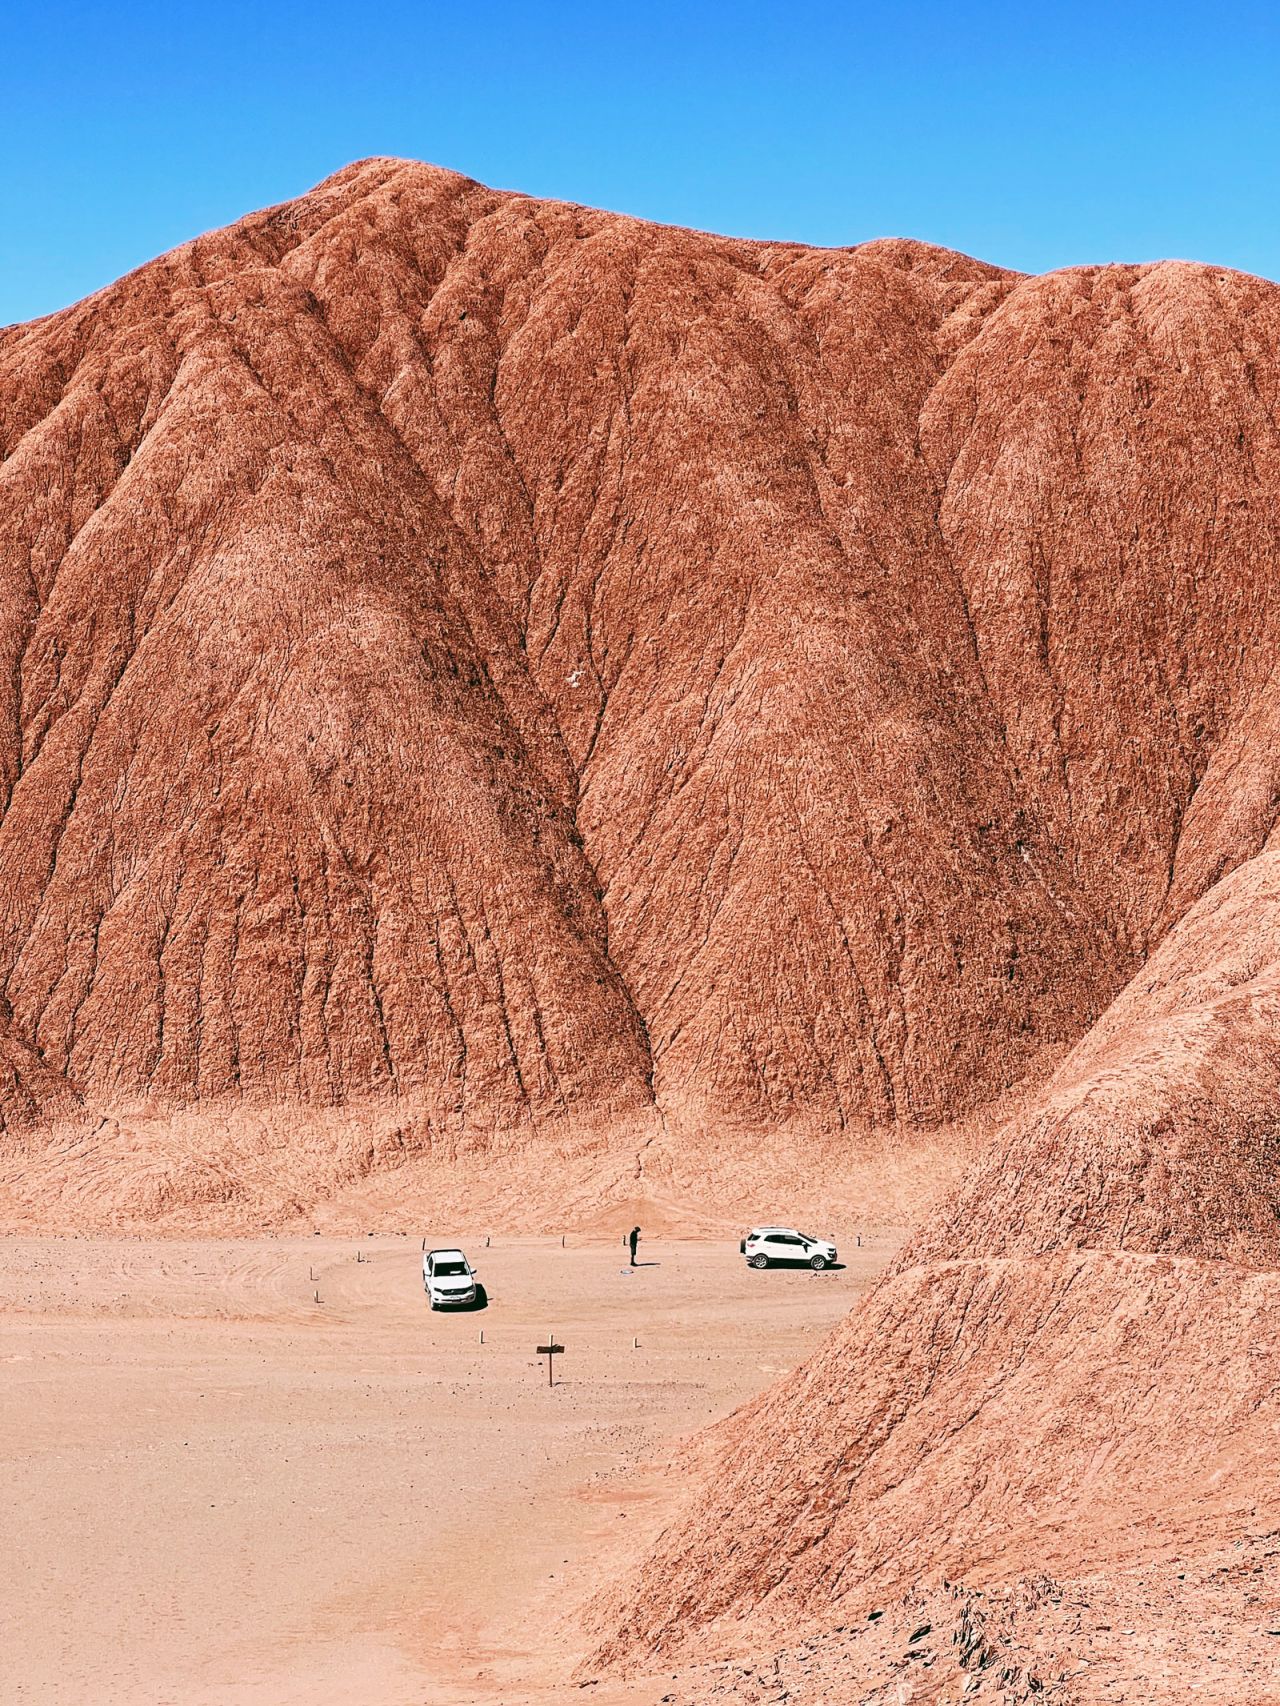 Beata Krowicka, Poland, 3rd Place -- Travel, "Devil's Desert", Shot on iPhone 13 Pro, Tolar Grande, Argentina